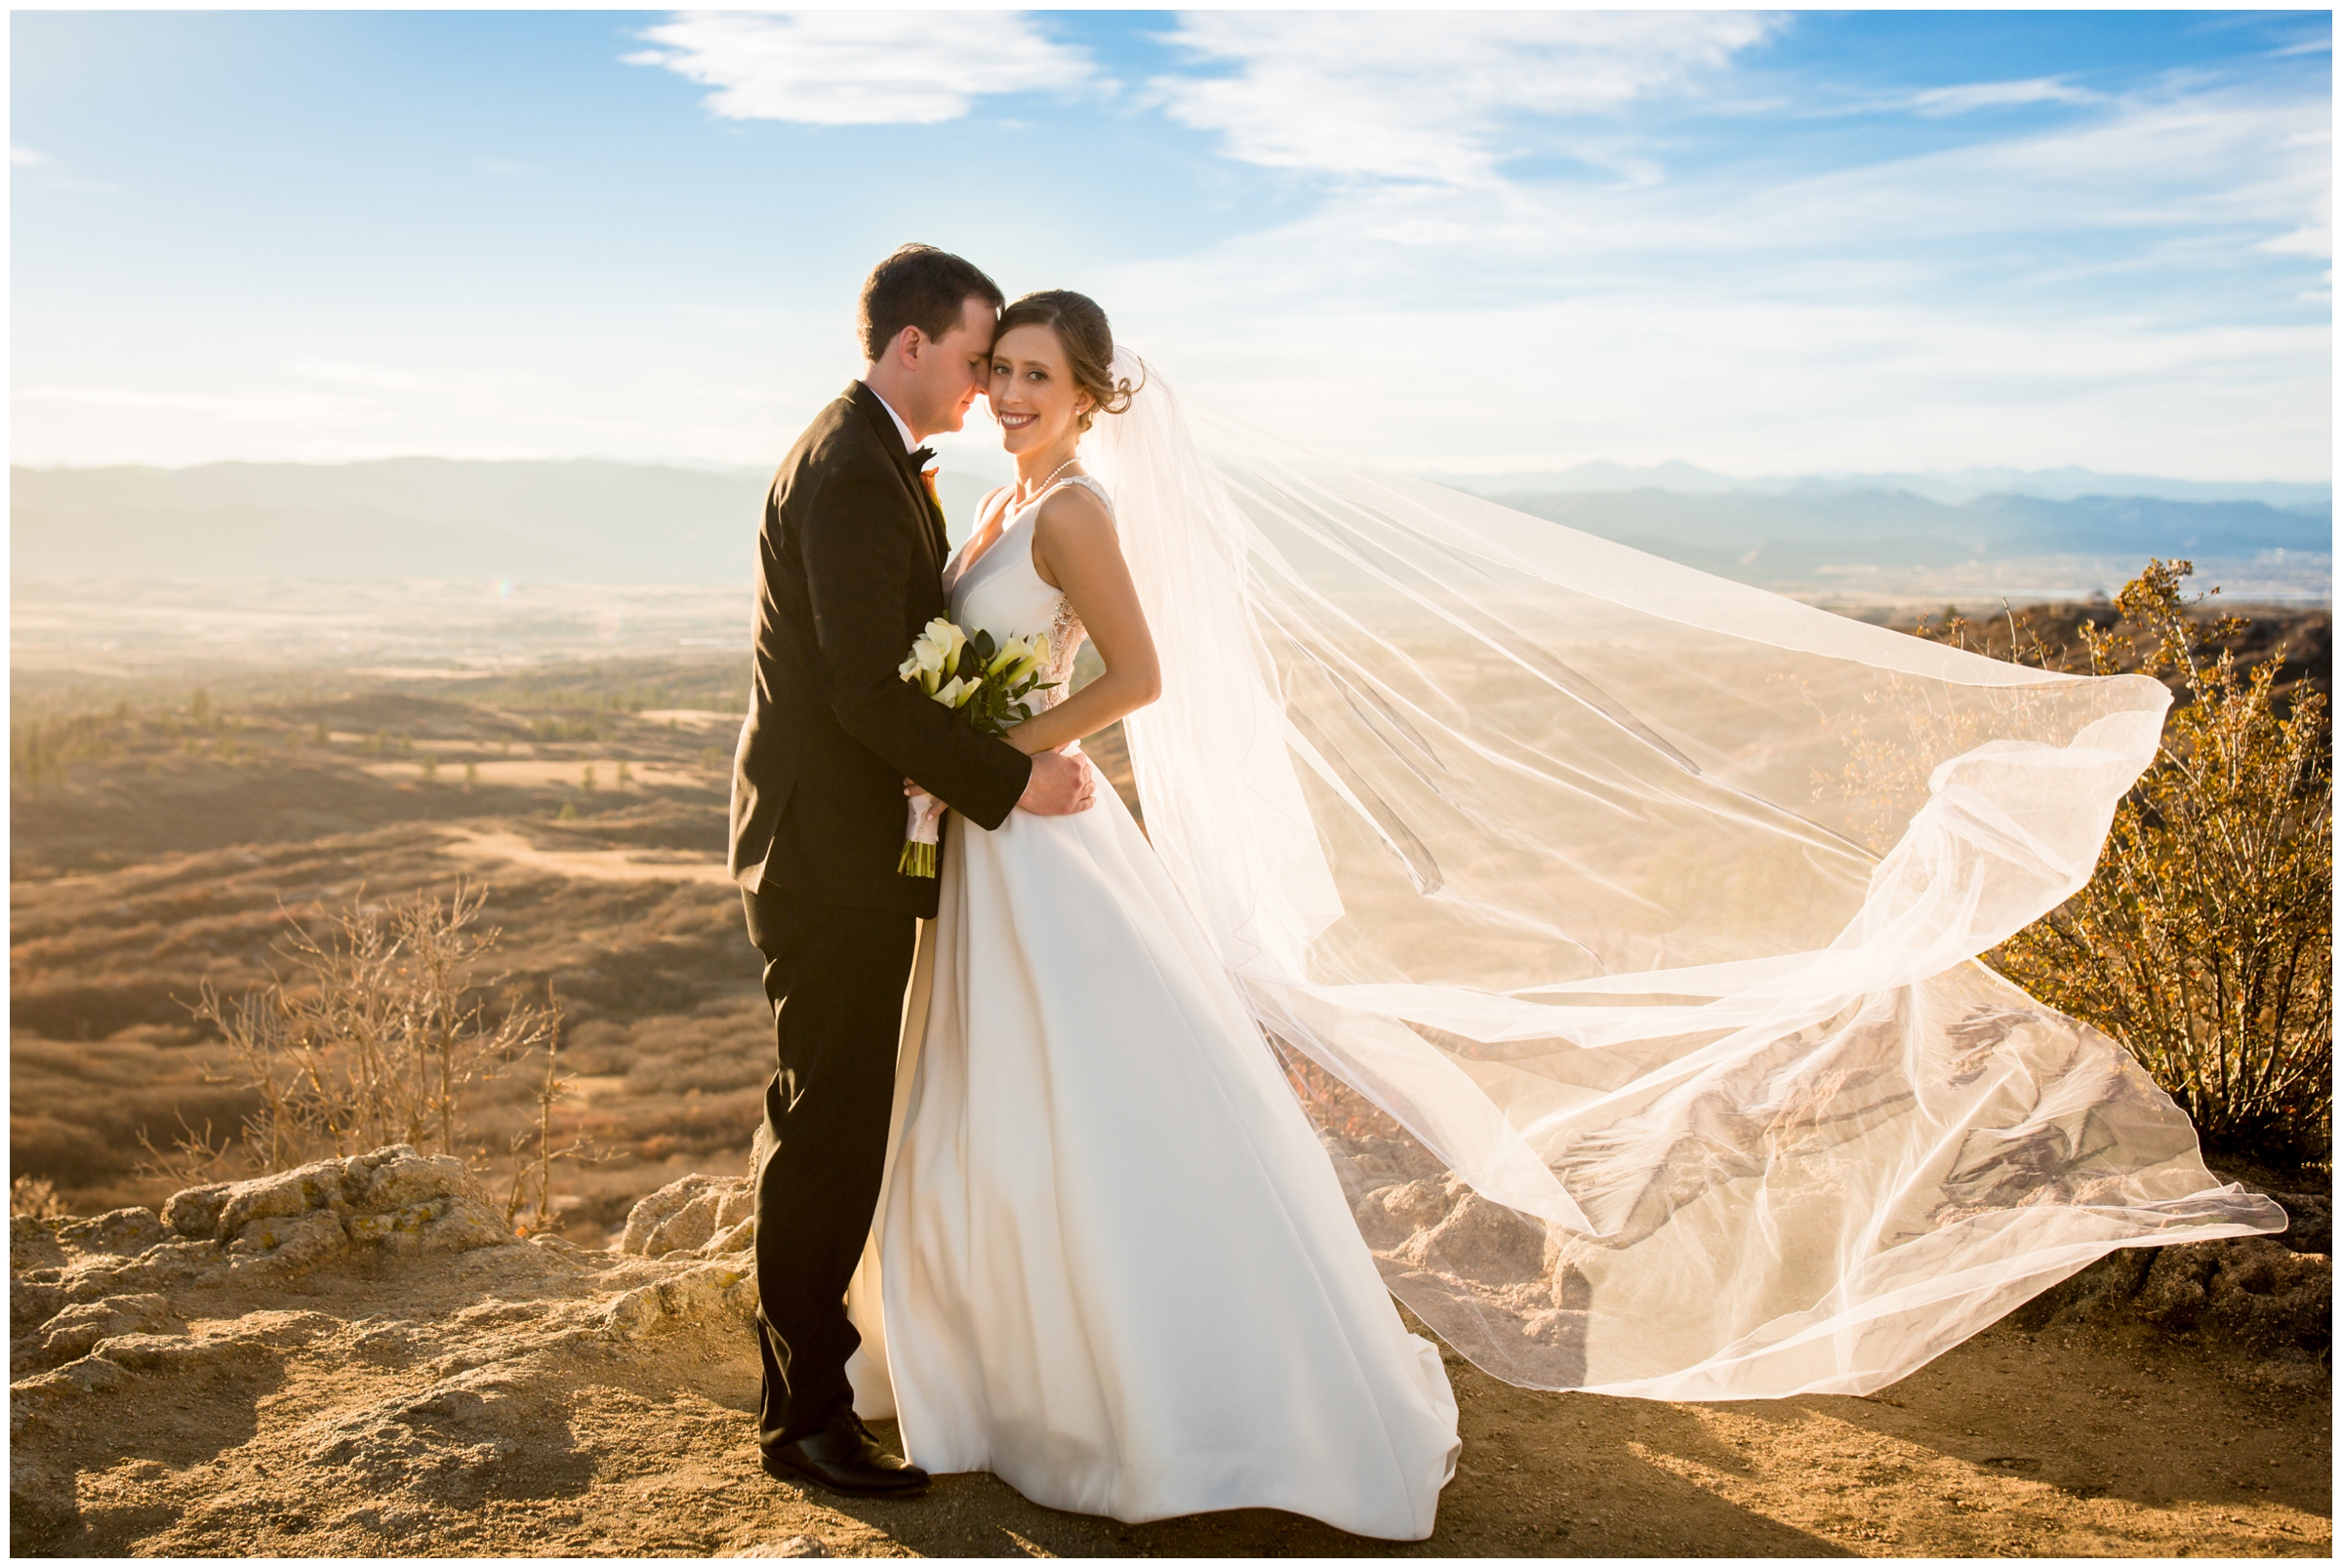 Cielo Castle Pines wedding photos by Colorado photographer Plum Pretty Photography